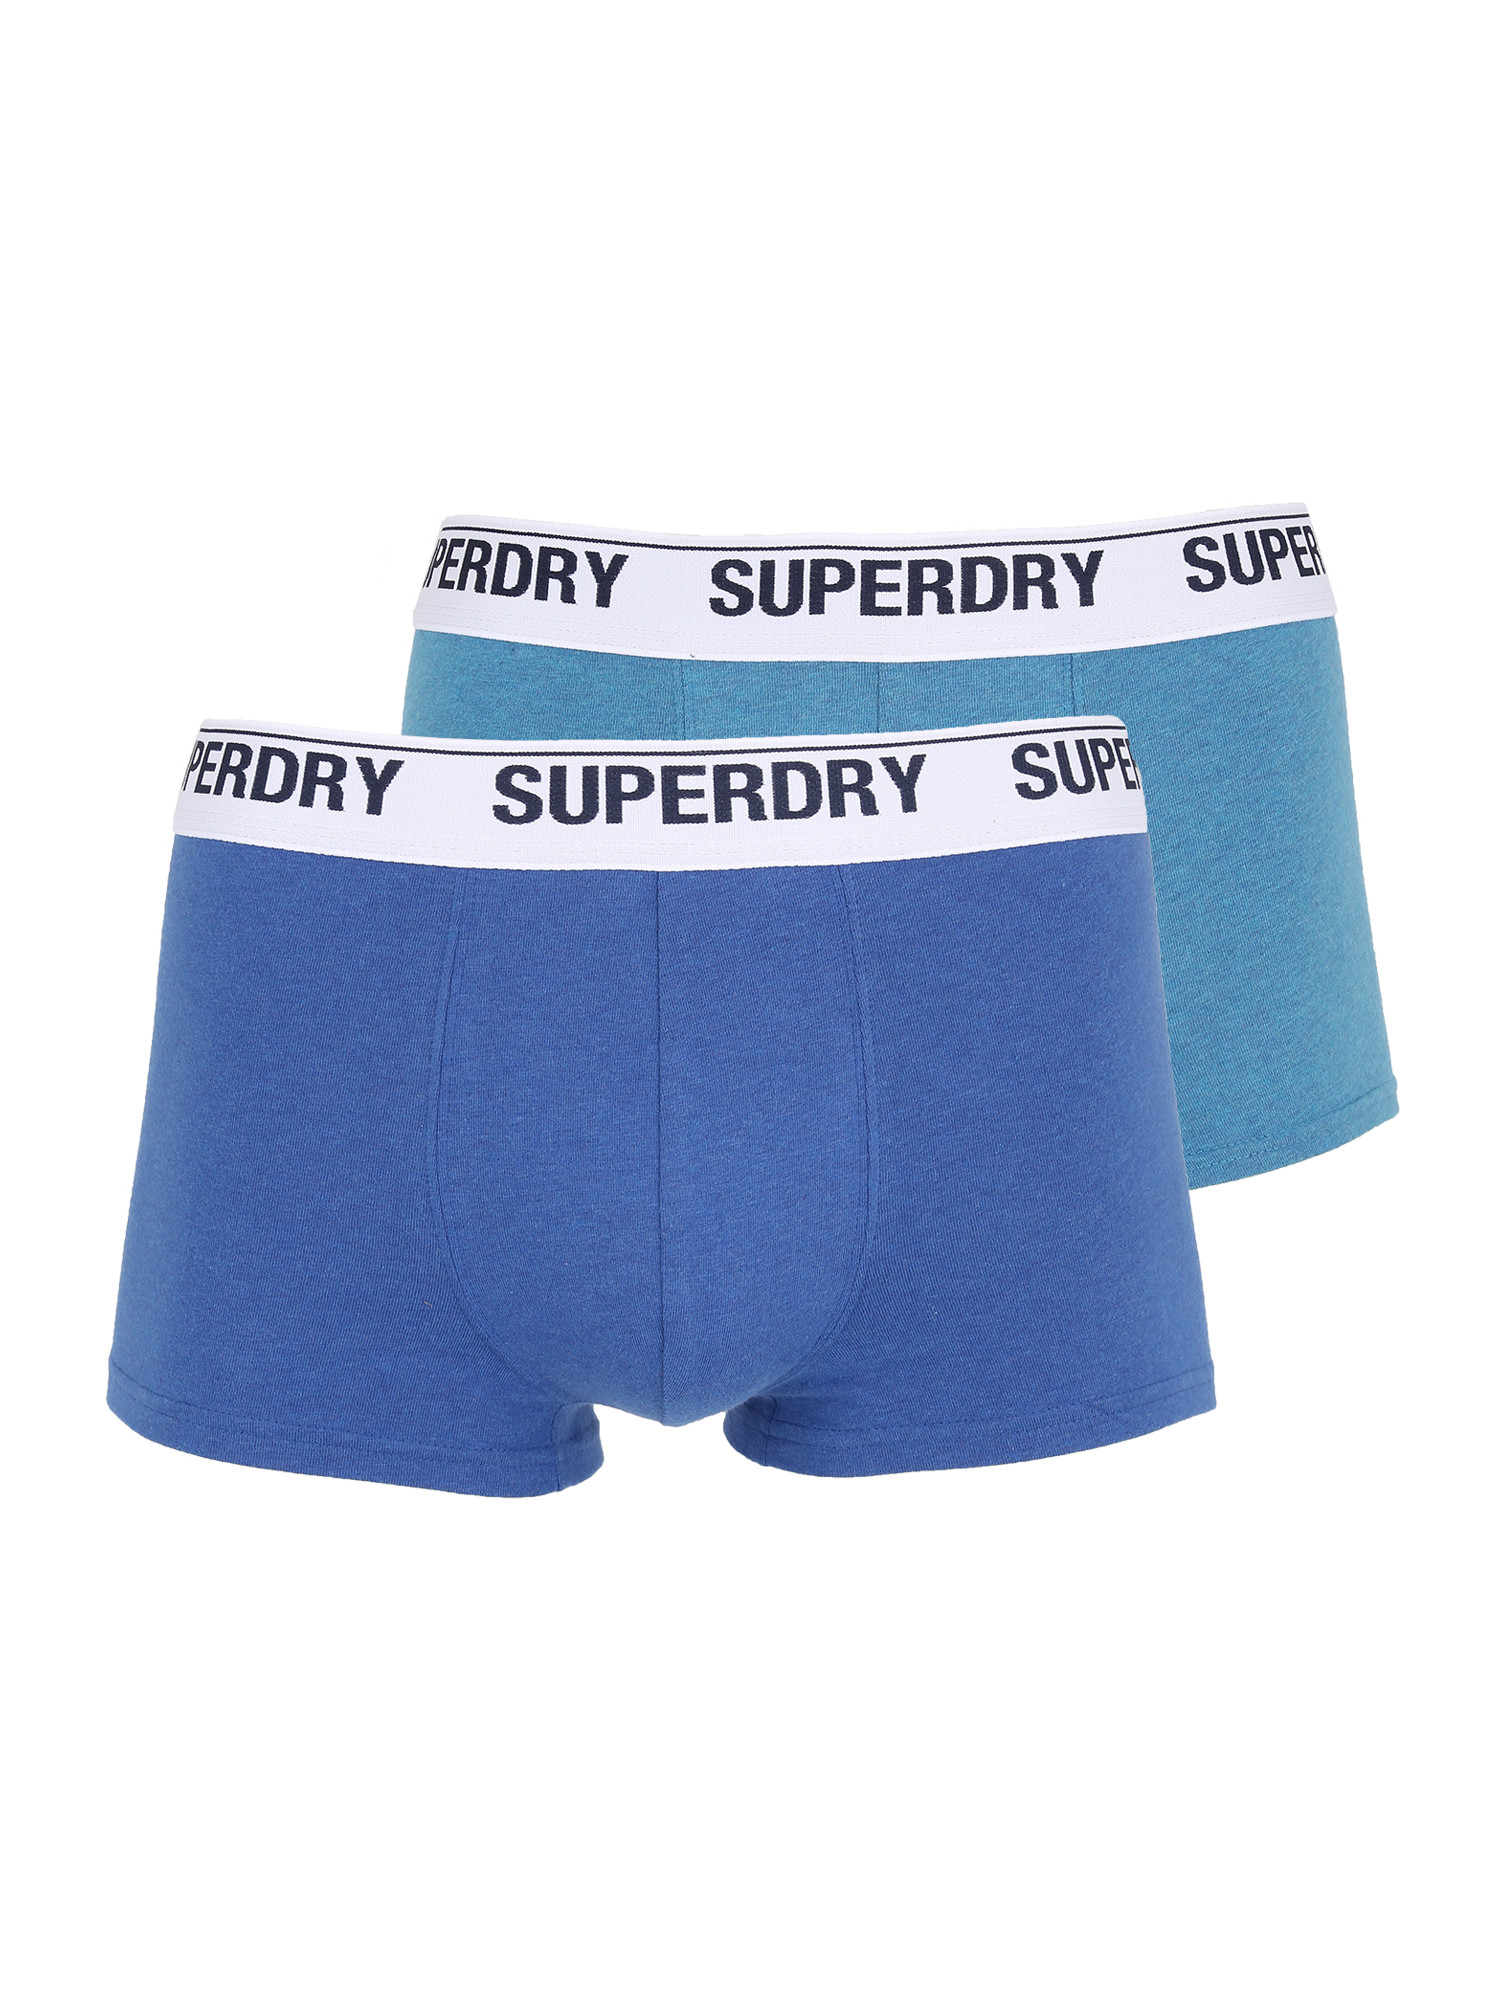 Superdry Boxer in Blu, Blu Chiaro 